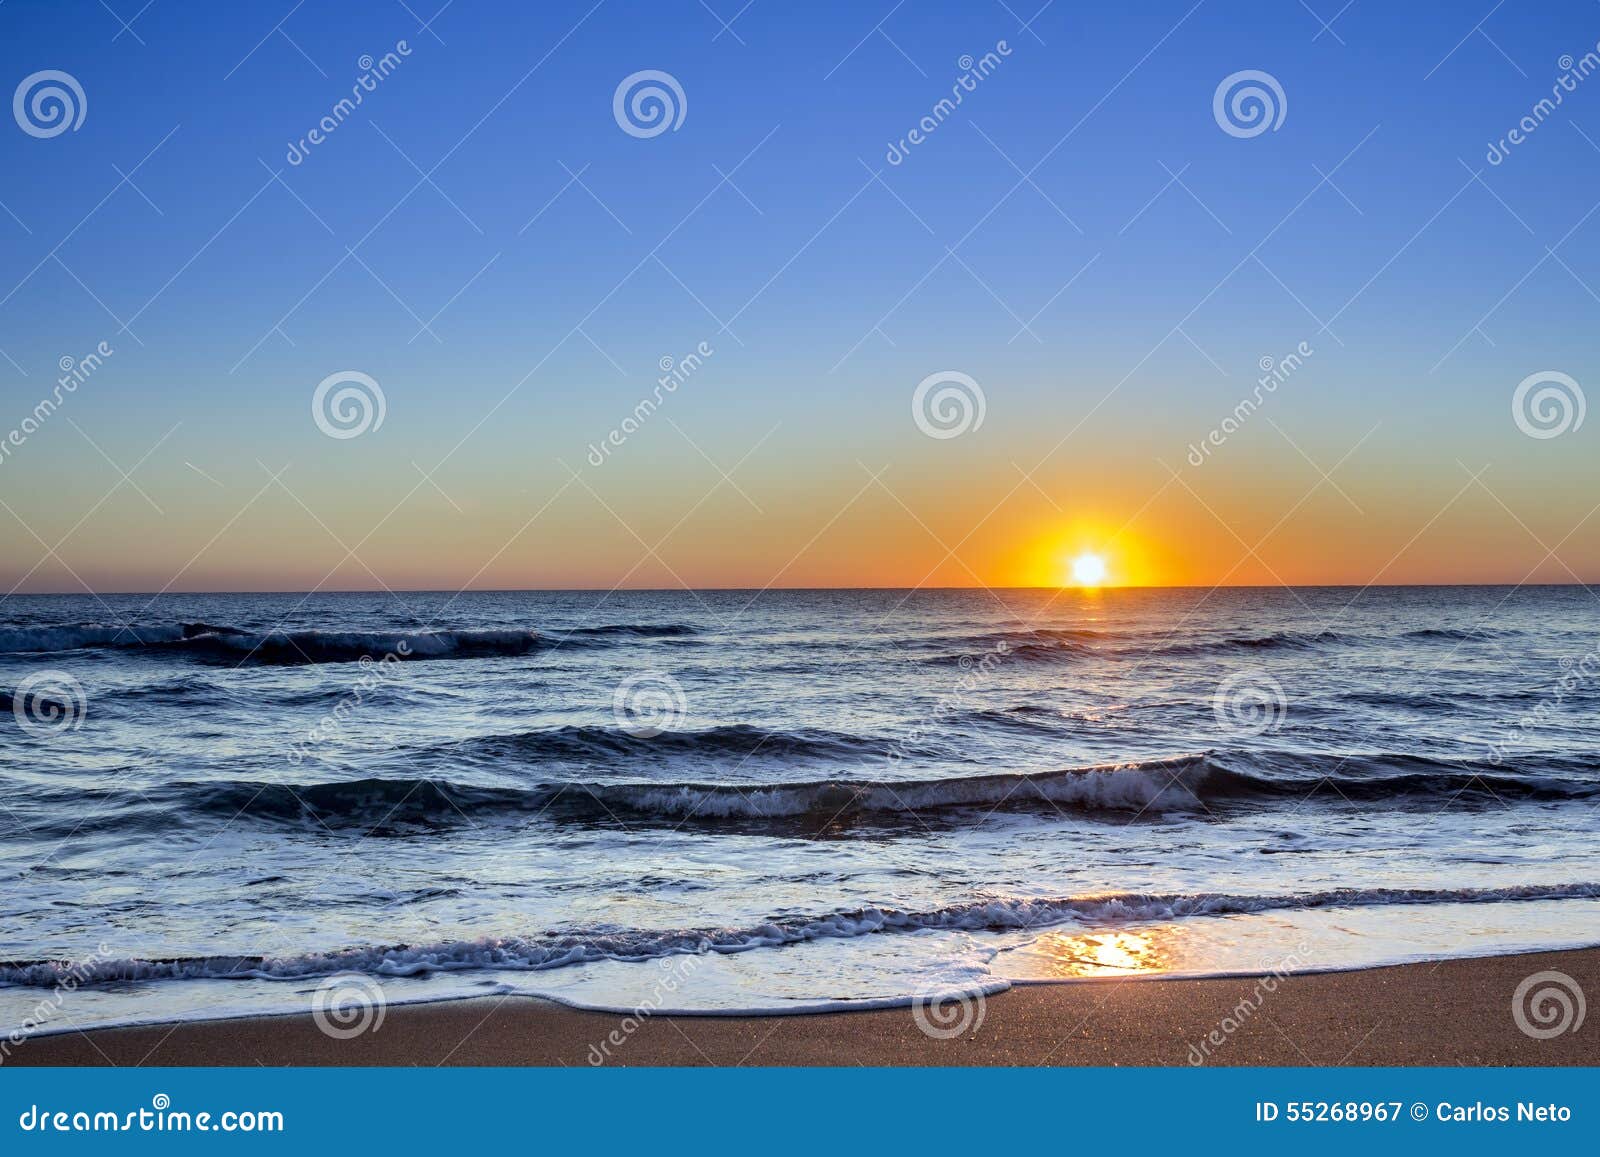 sunset at dunas douradas beach seascape, famous destination